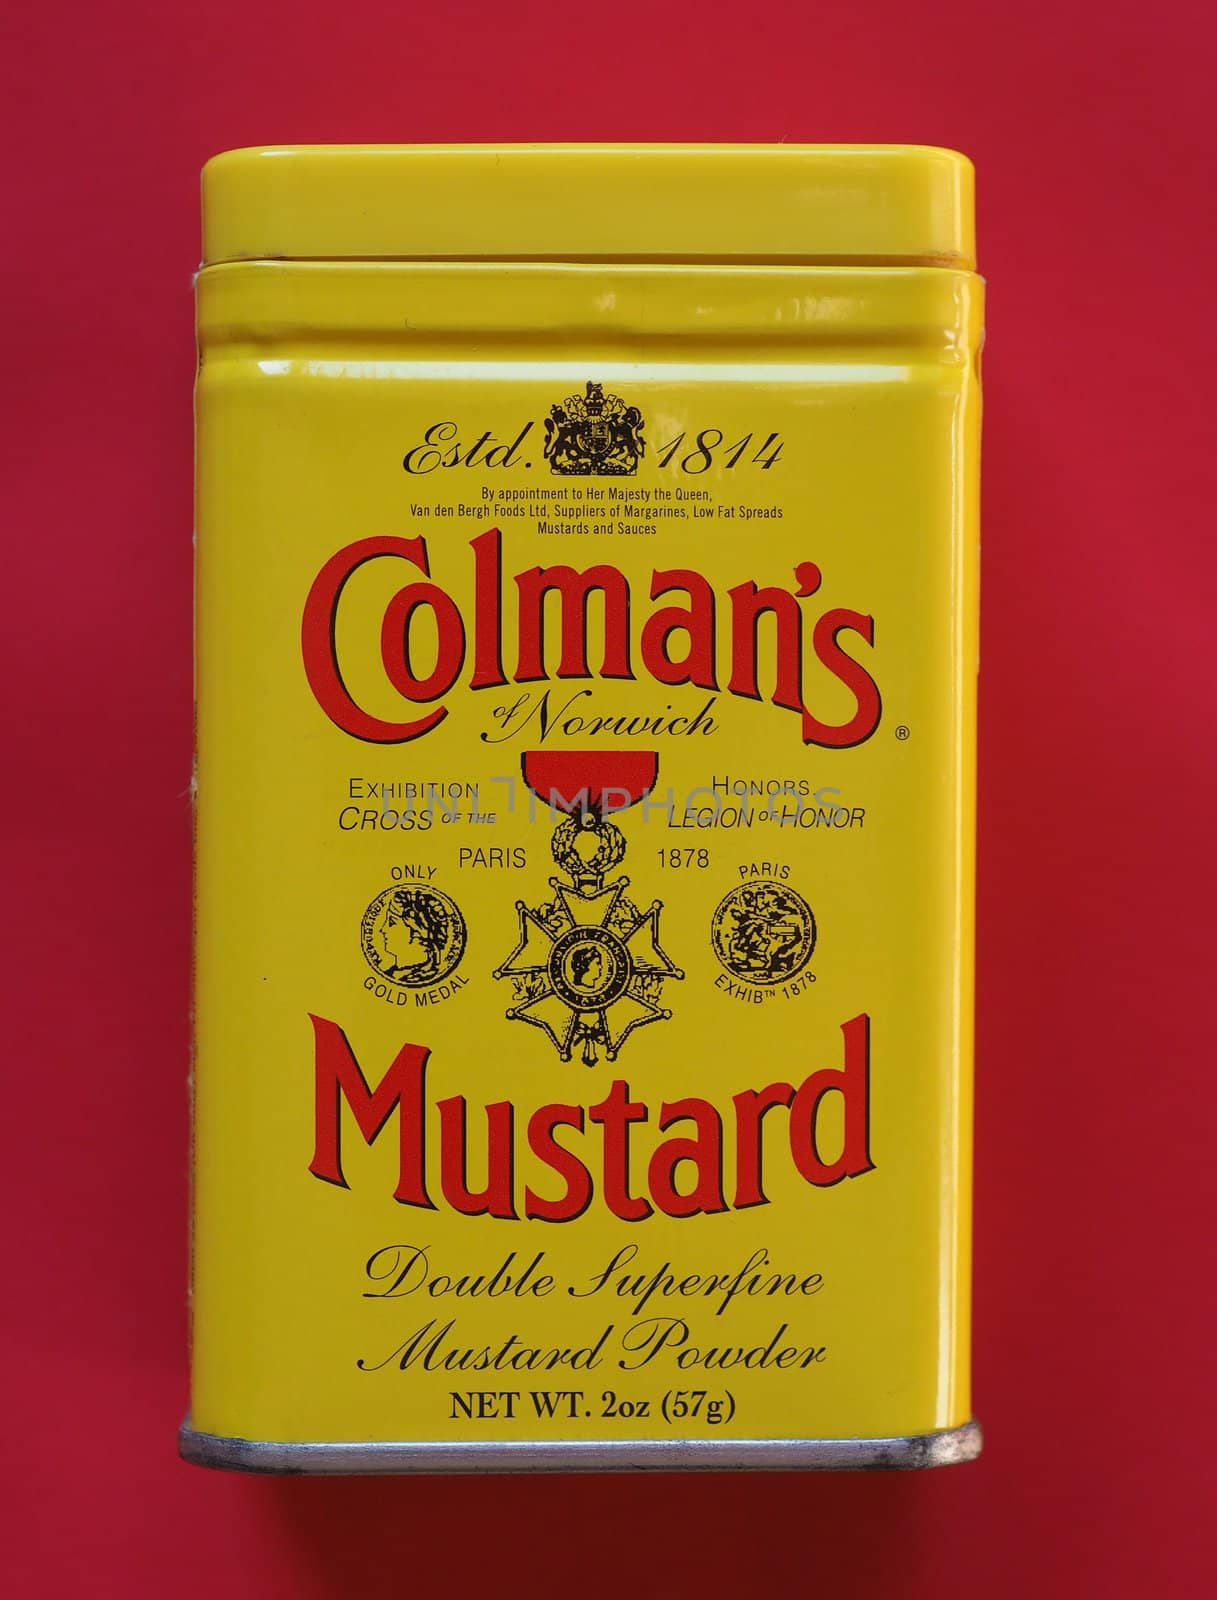 Colmans Mustard tin can by claudiodivizia